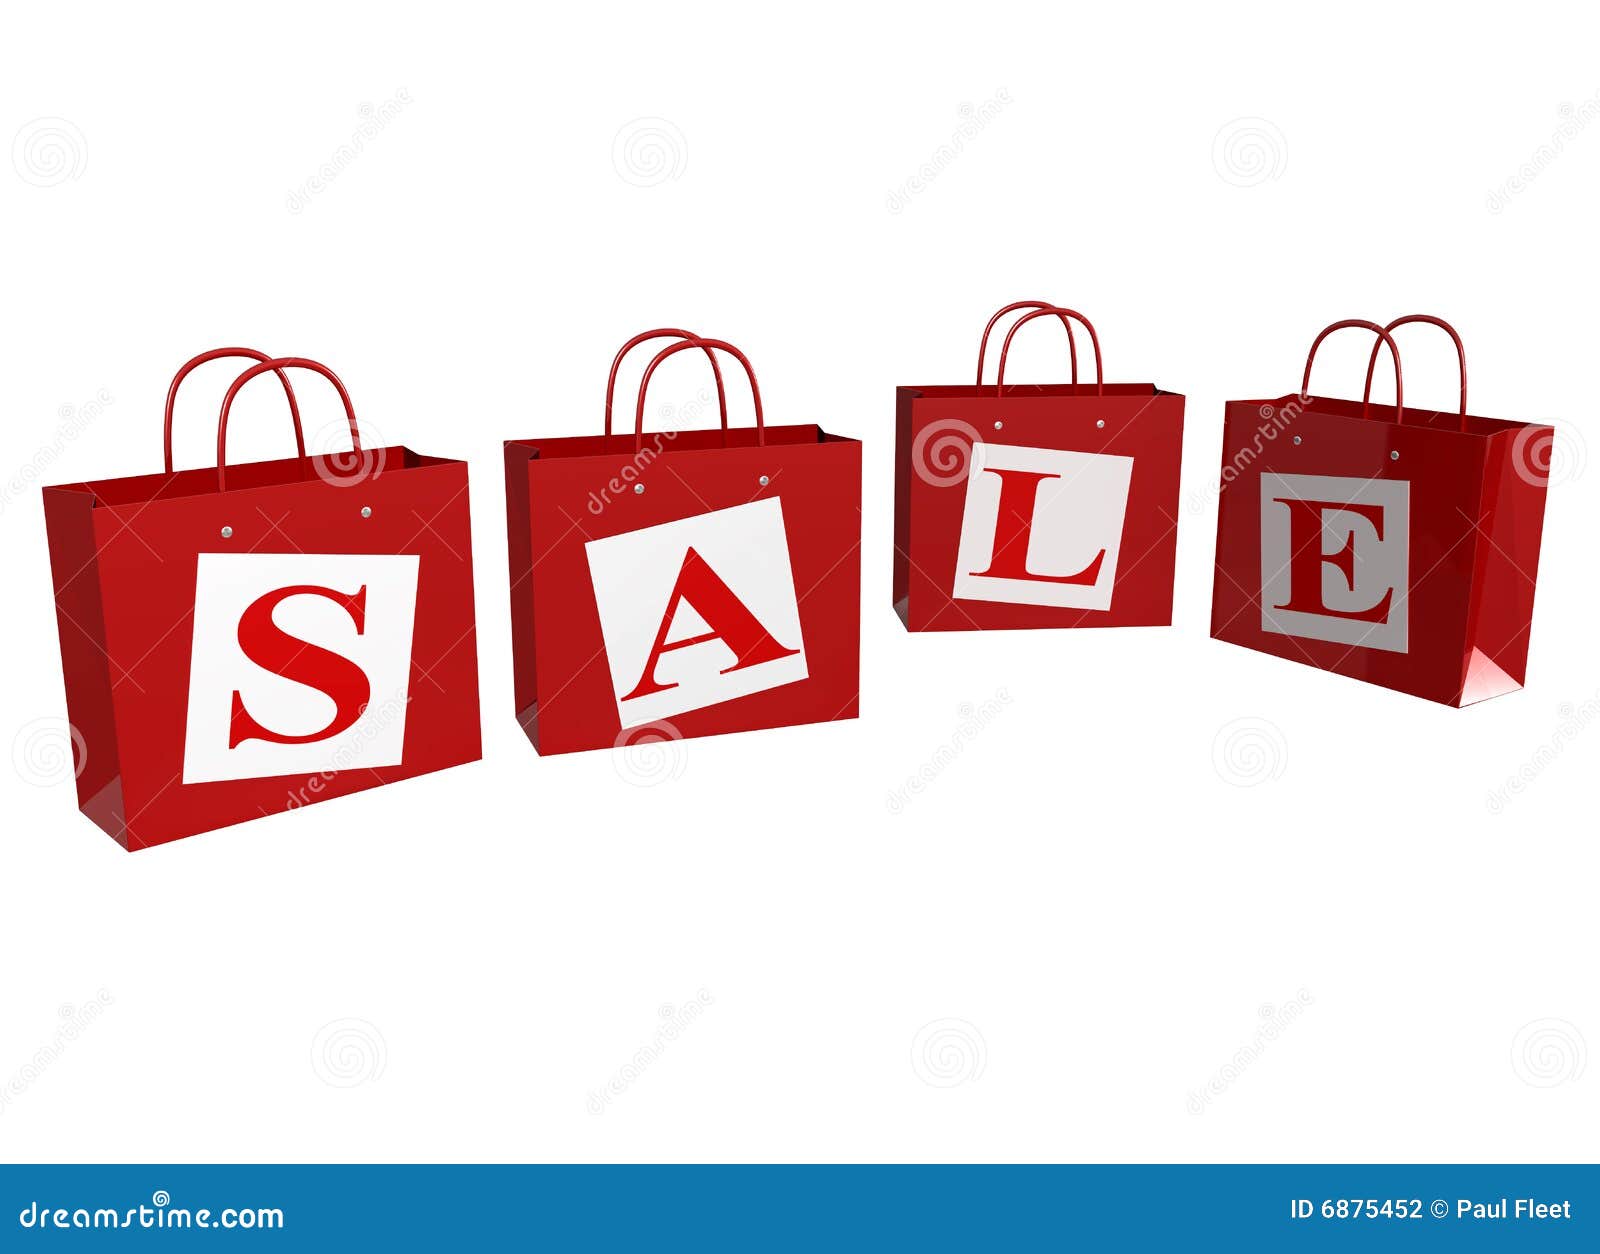 Sale time stock illustration. Illustration of retail, shopping - 6875452